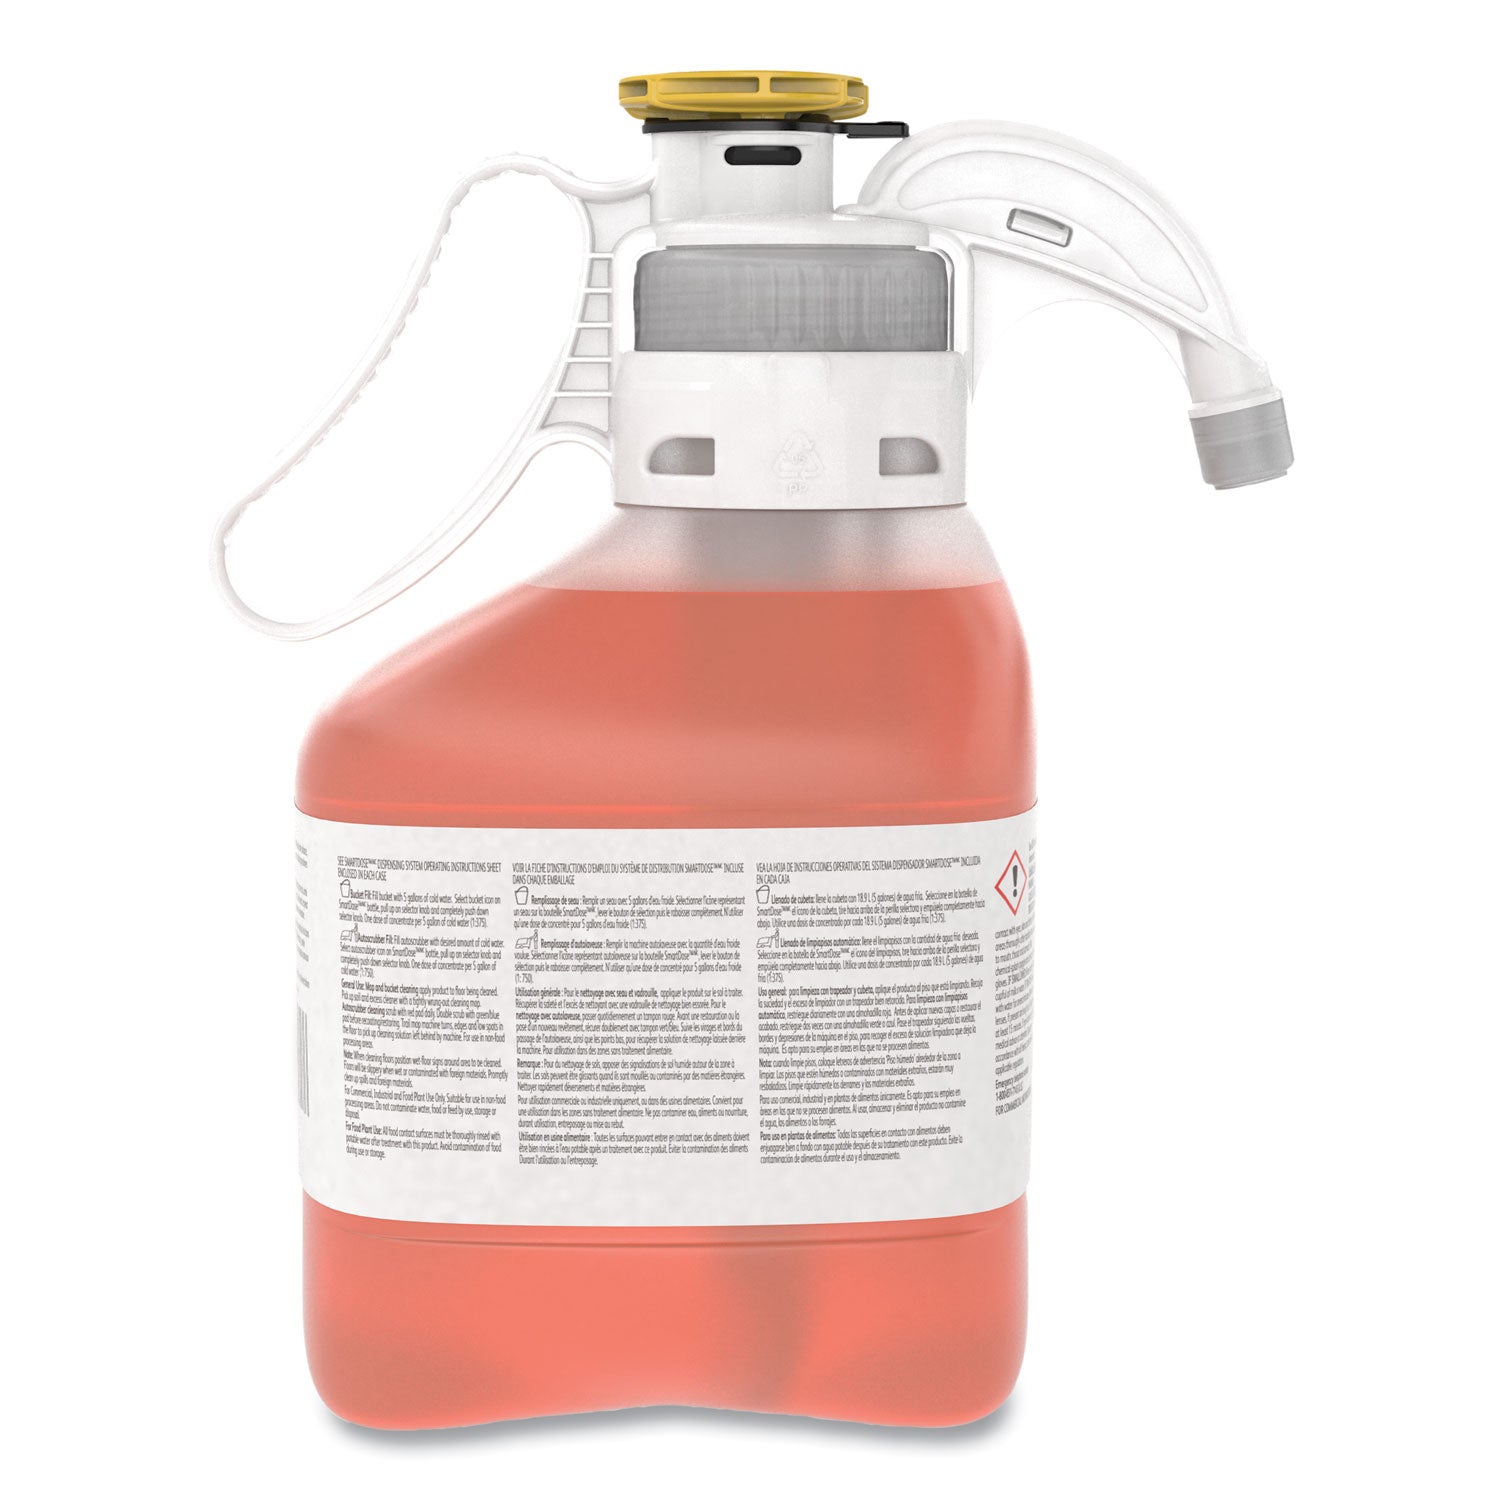 Stride Neutral Cleaner, Citrus Scent, 1.4 mL, 2 Bottles/Carton - 3